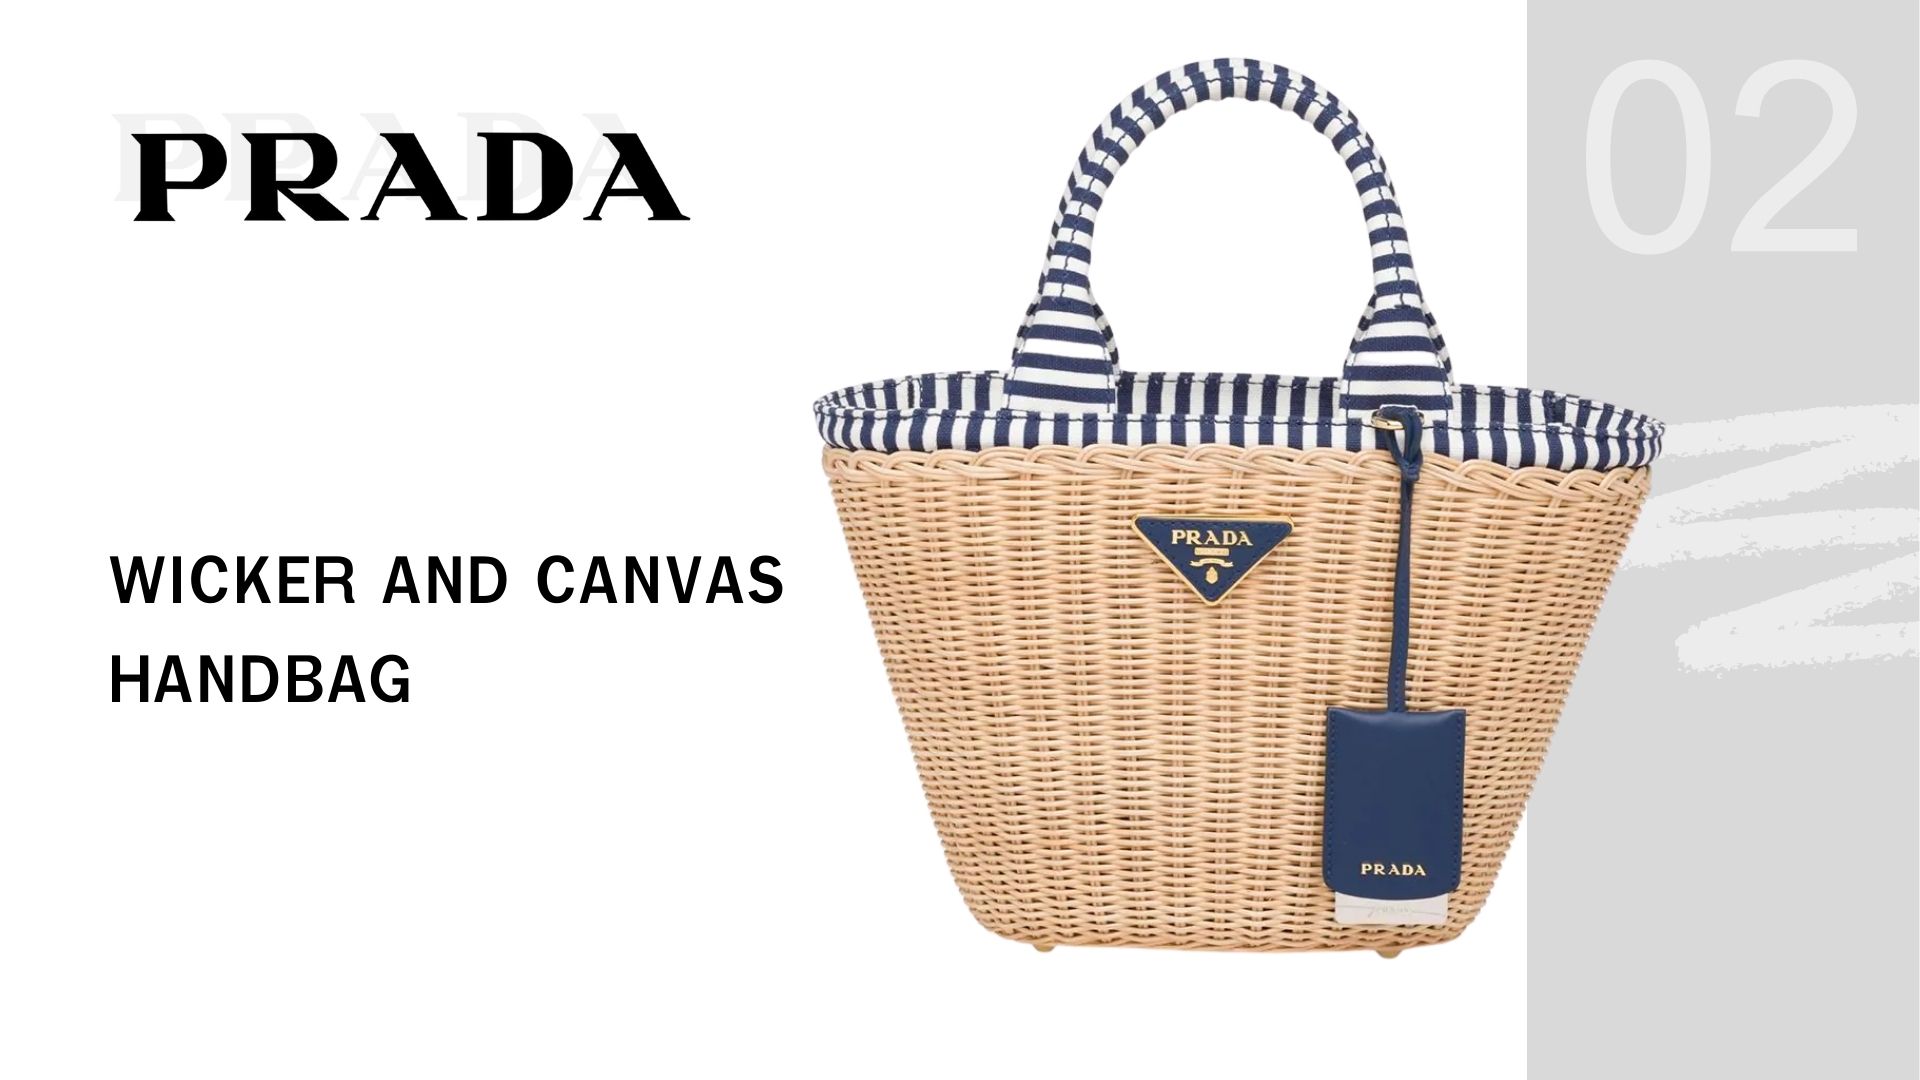 Prada Wicker and Canvas Handbag